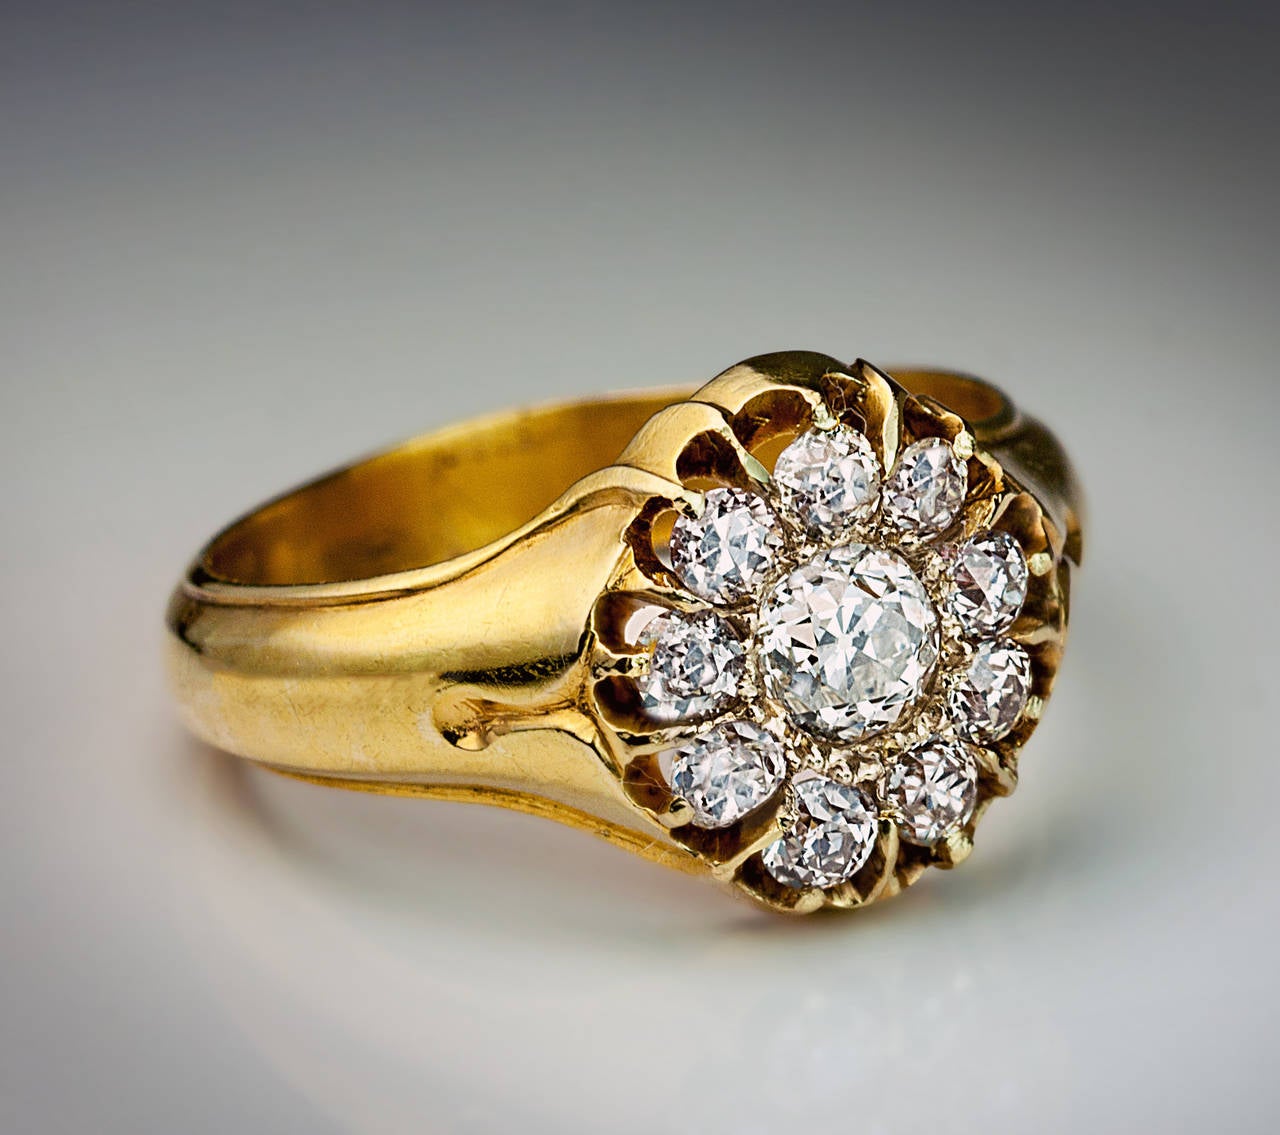 Antique 1800s Men's Diamond Cluster Gold Ring at 1stdibs